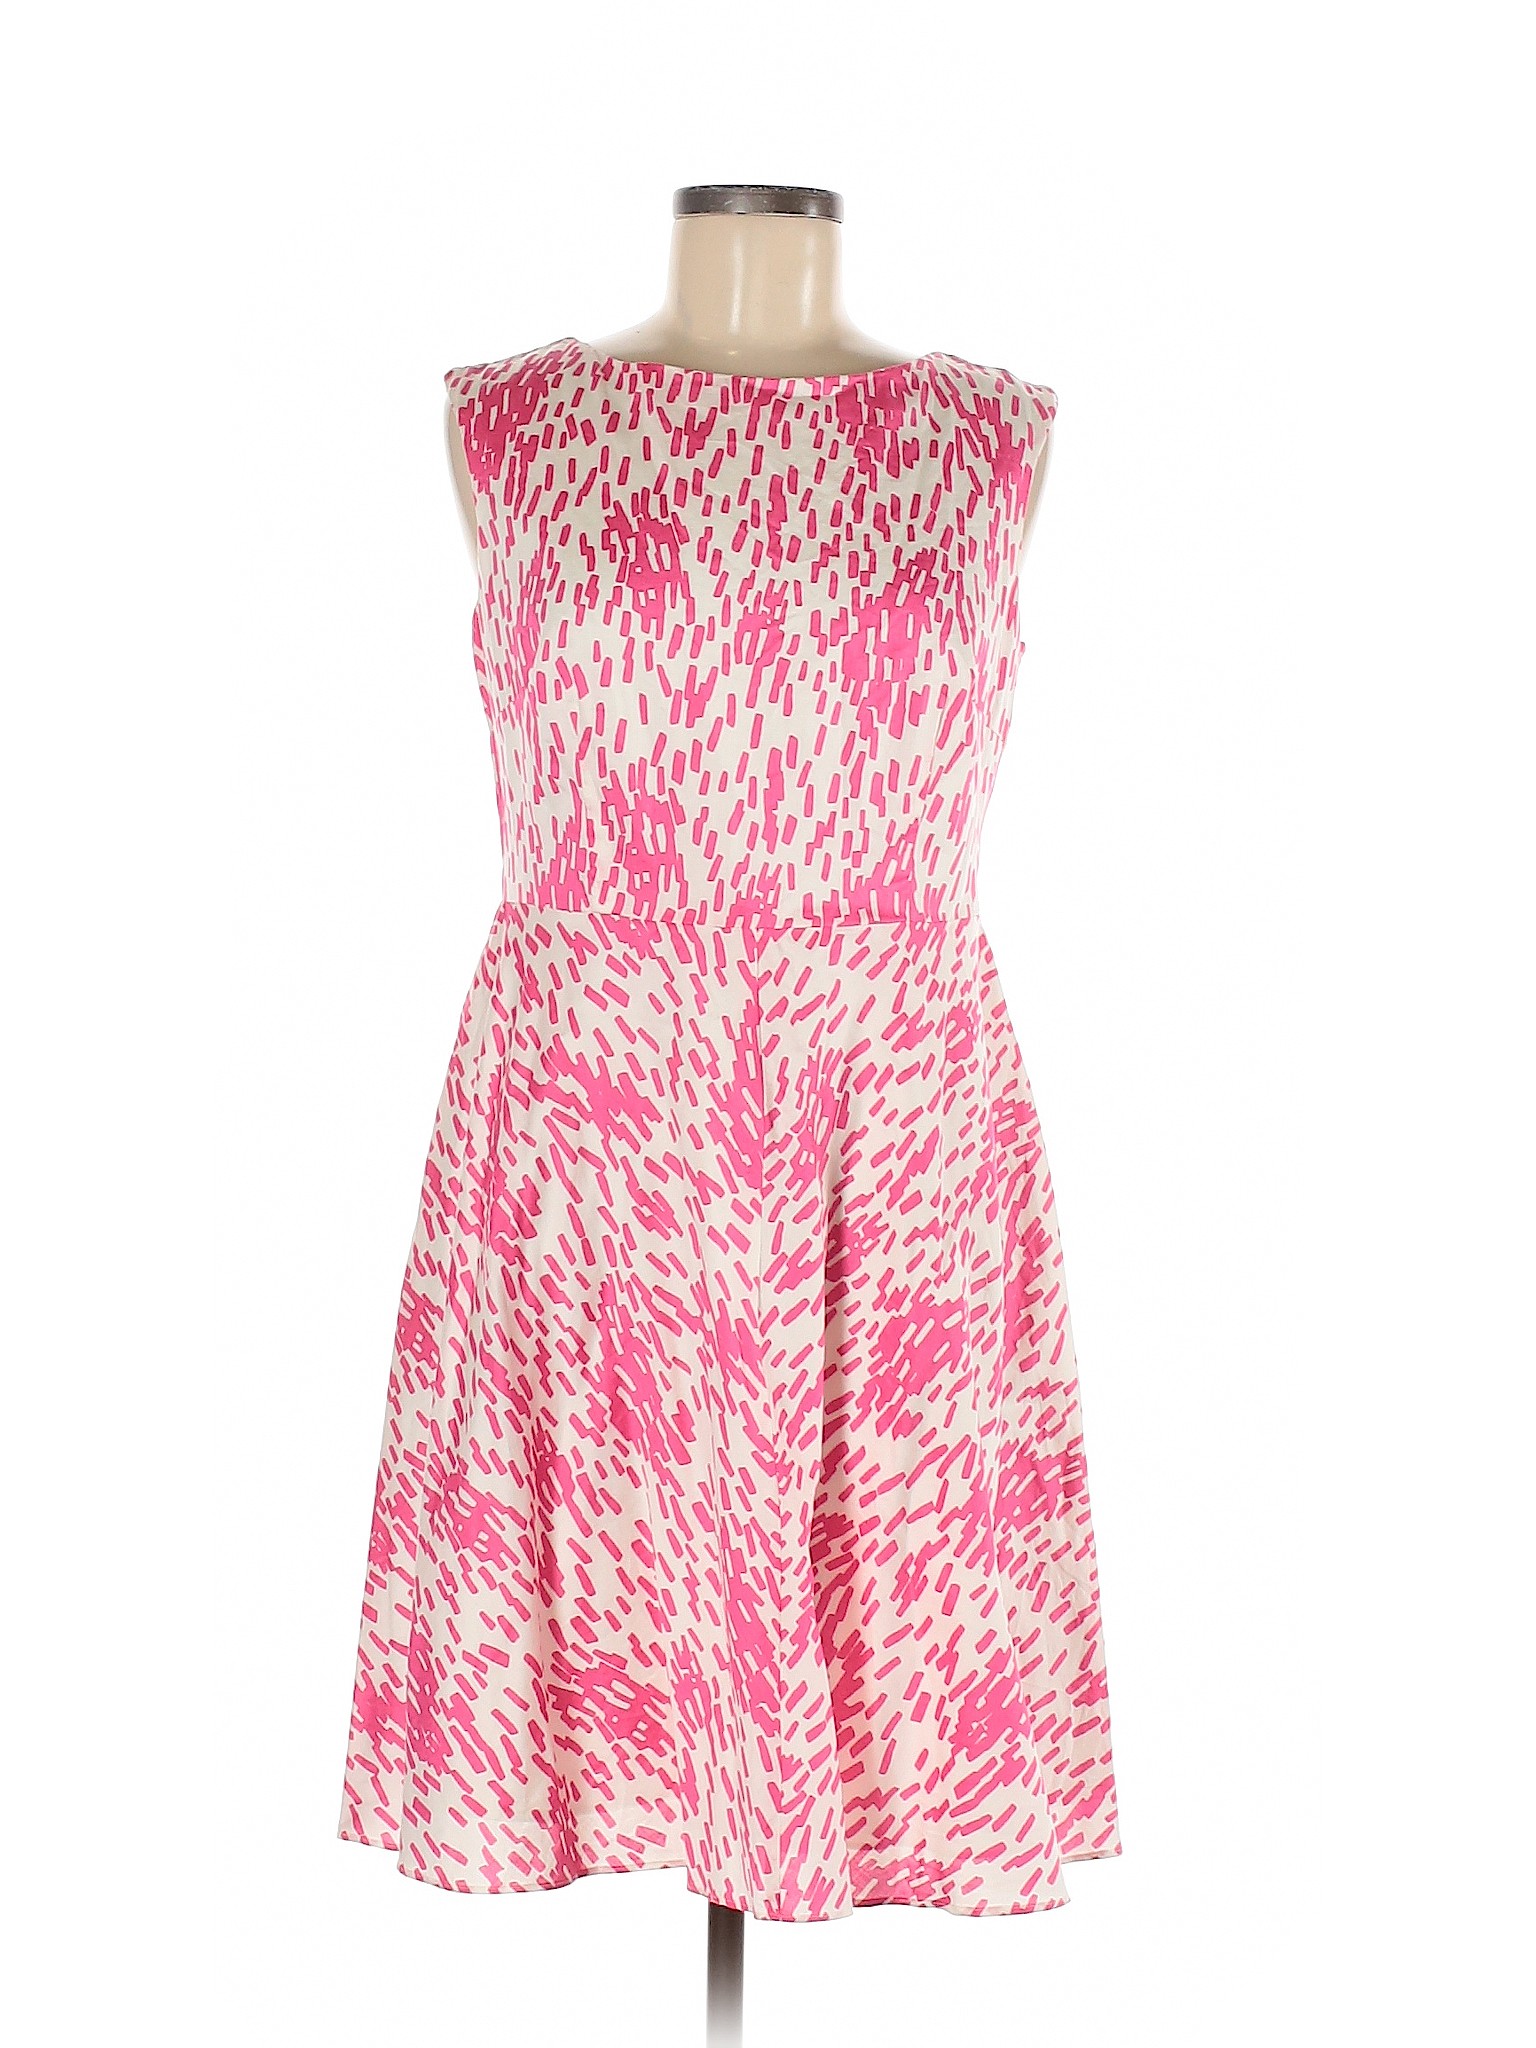 Boden Women Pink Casual Dress 8 Petites | eBay